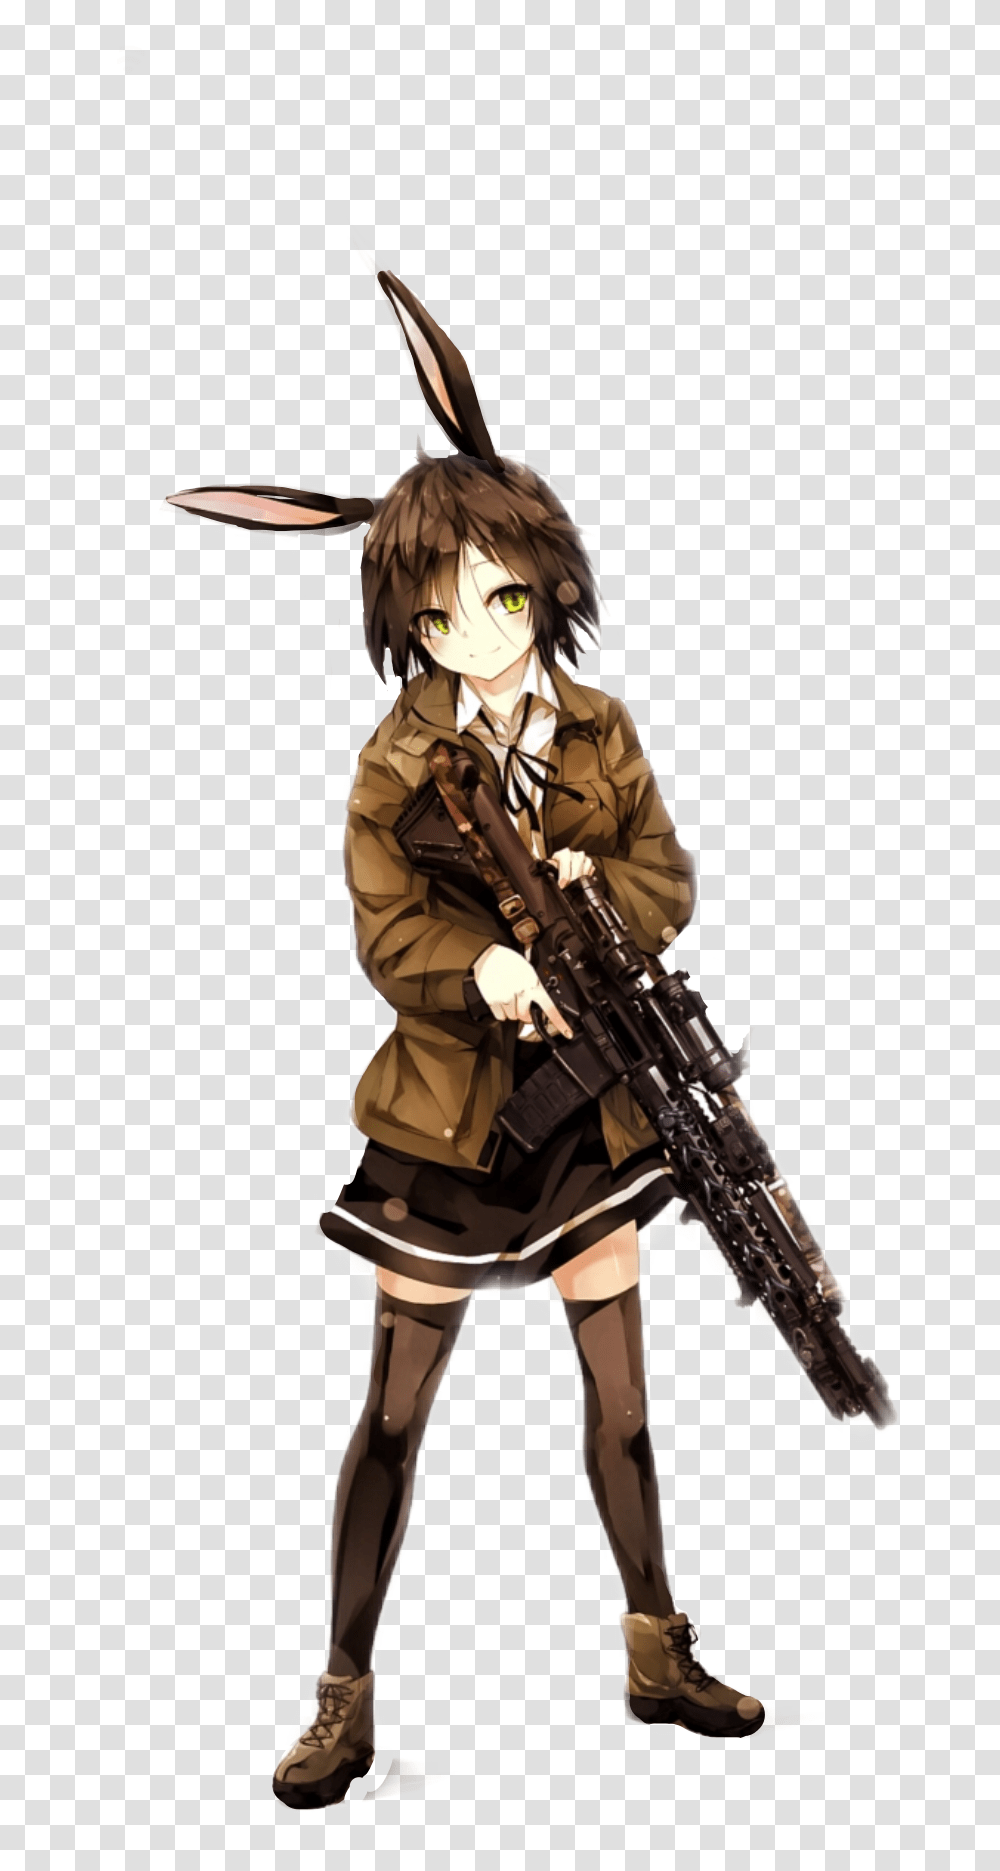 Bunny Anime Girl Gun Freetoedit Anime Girl With Gun Render, Person, Human, Weapon, Weaponry Transparent Png